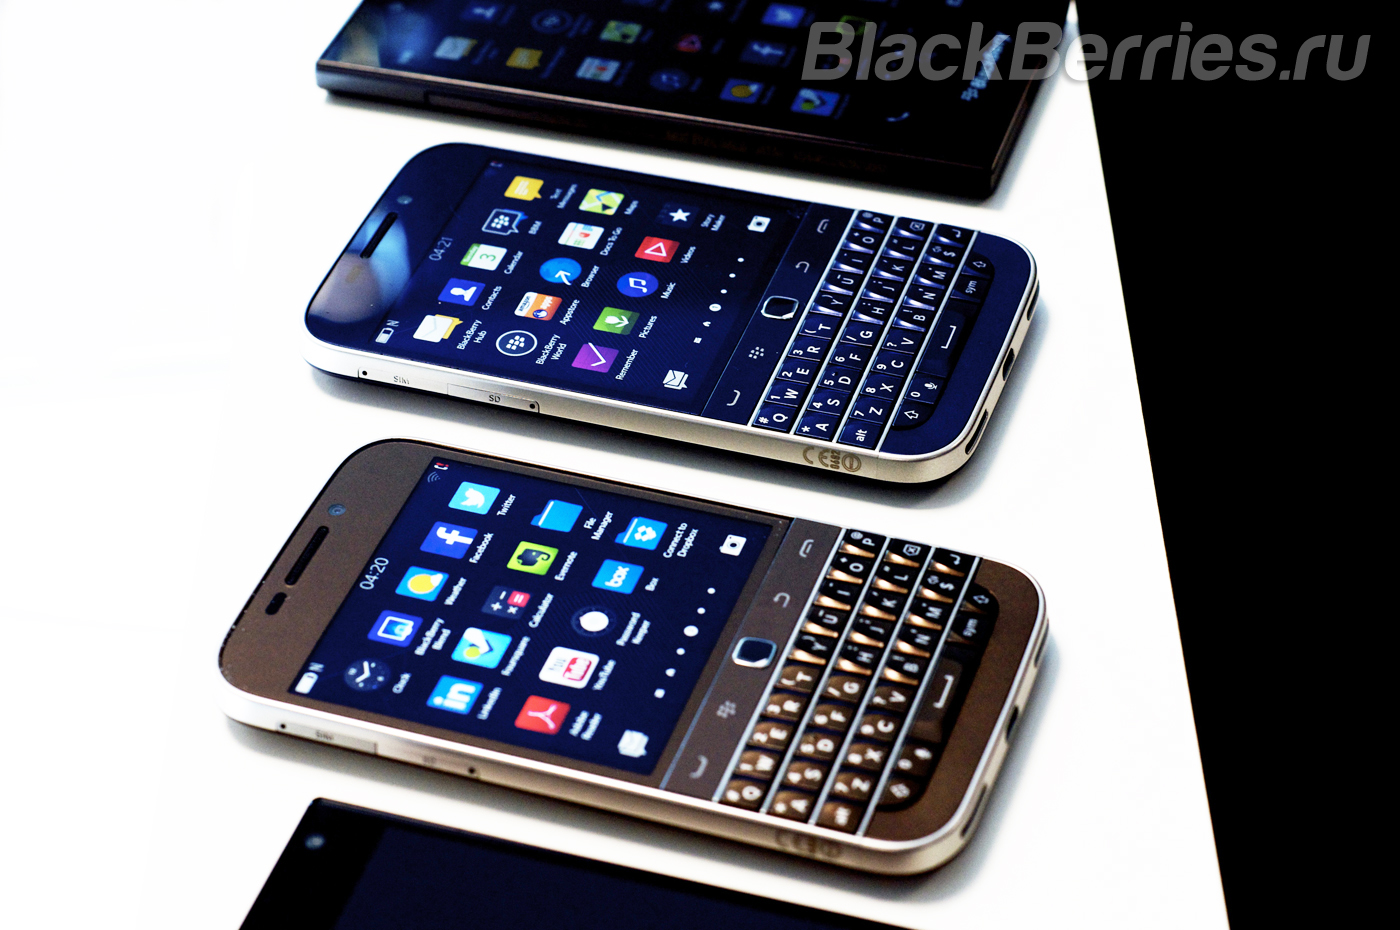 BlackBerry-Classic-Blue-Bronze-2